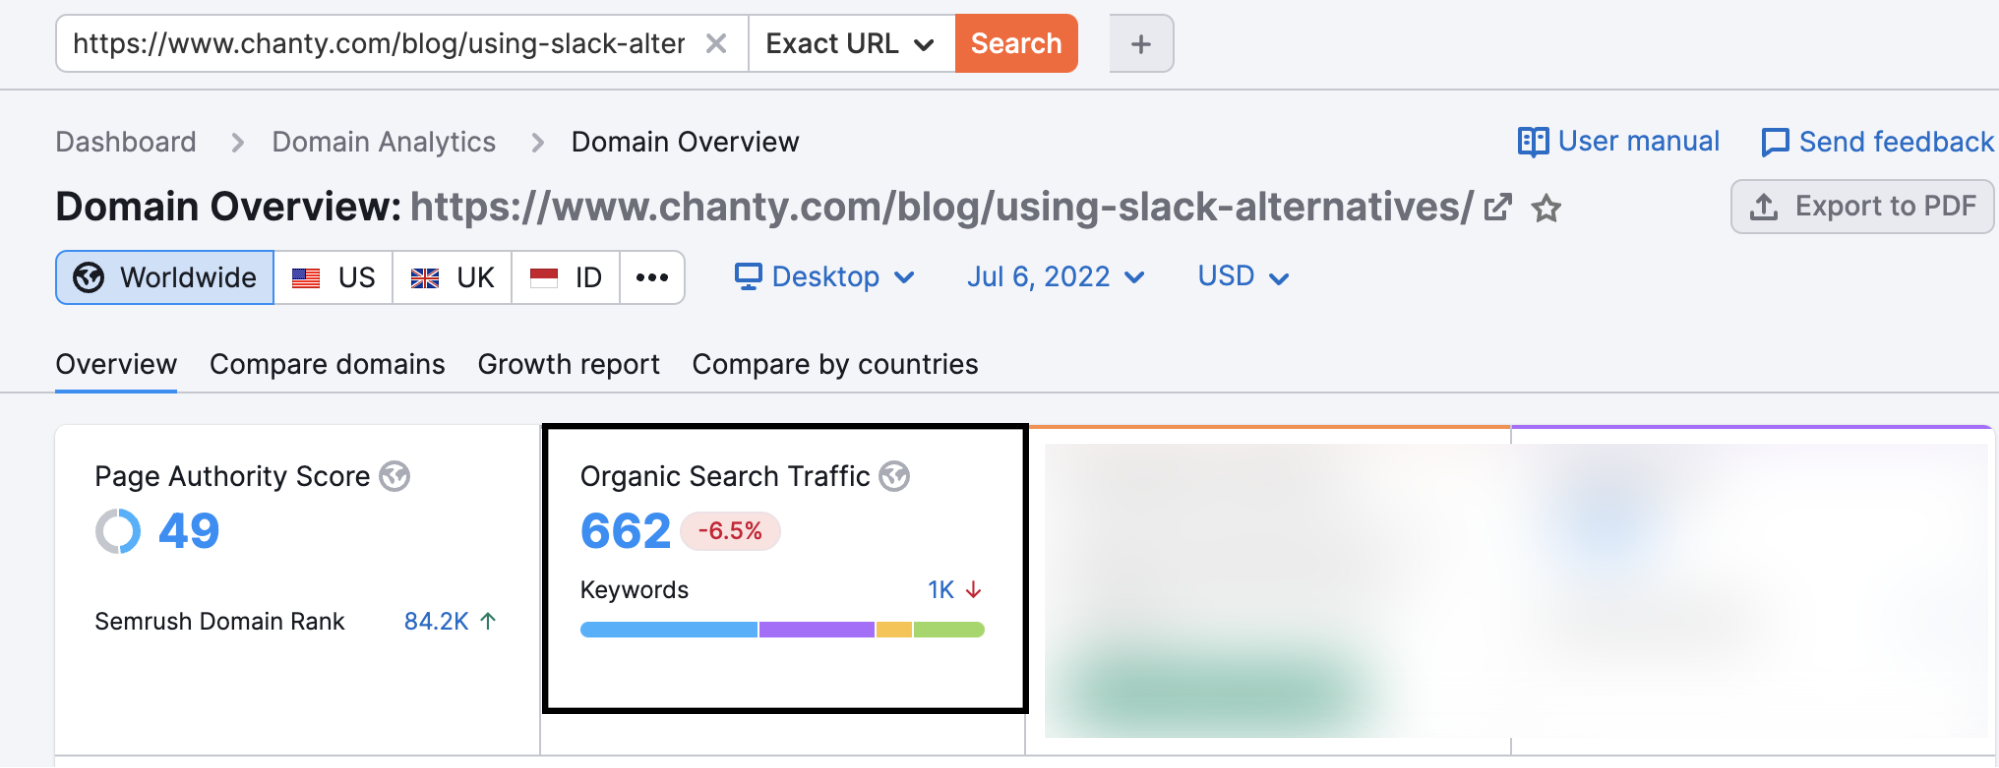 organic traffic for slack alternatives post